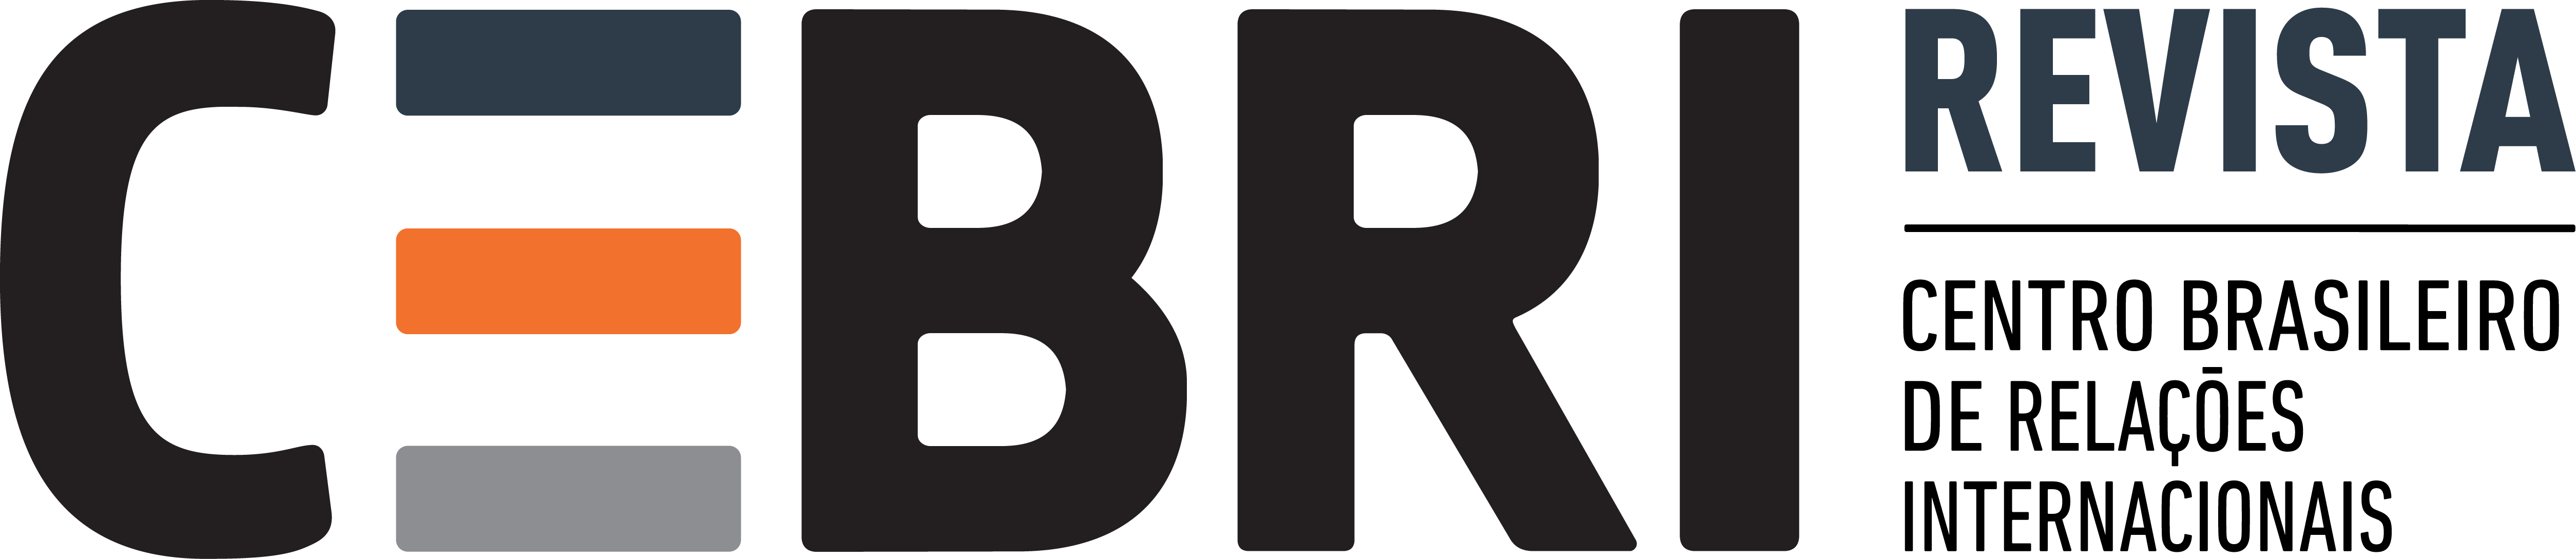 Logo CEBRI-Revista